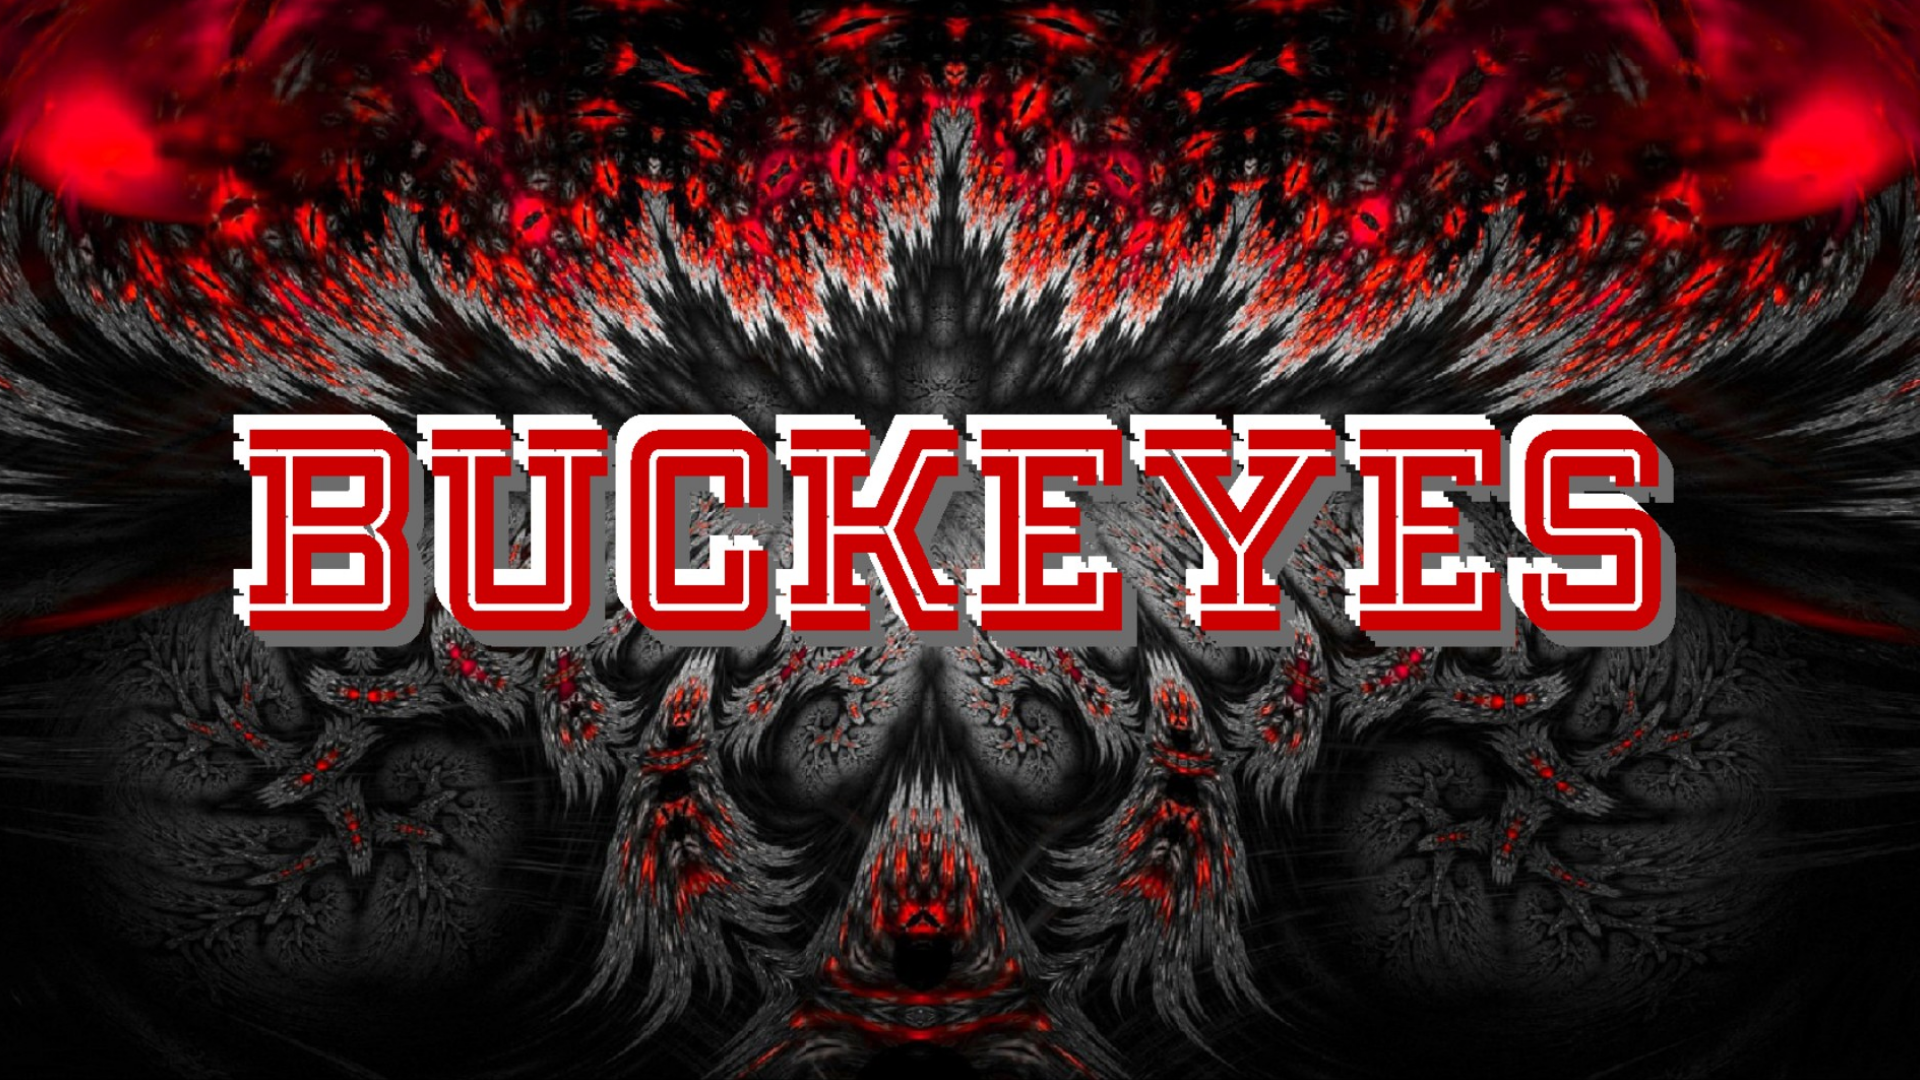 Ohio State Buckeyes Wallpaper Background